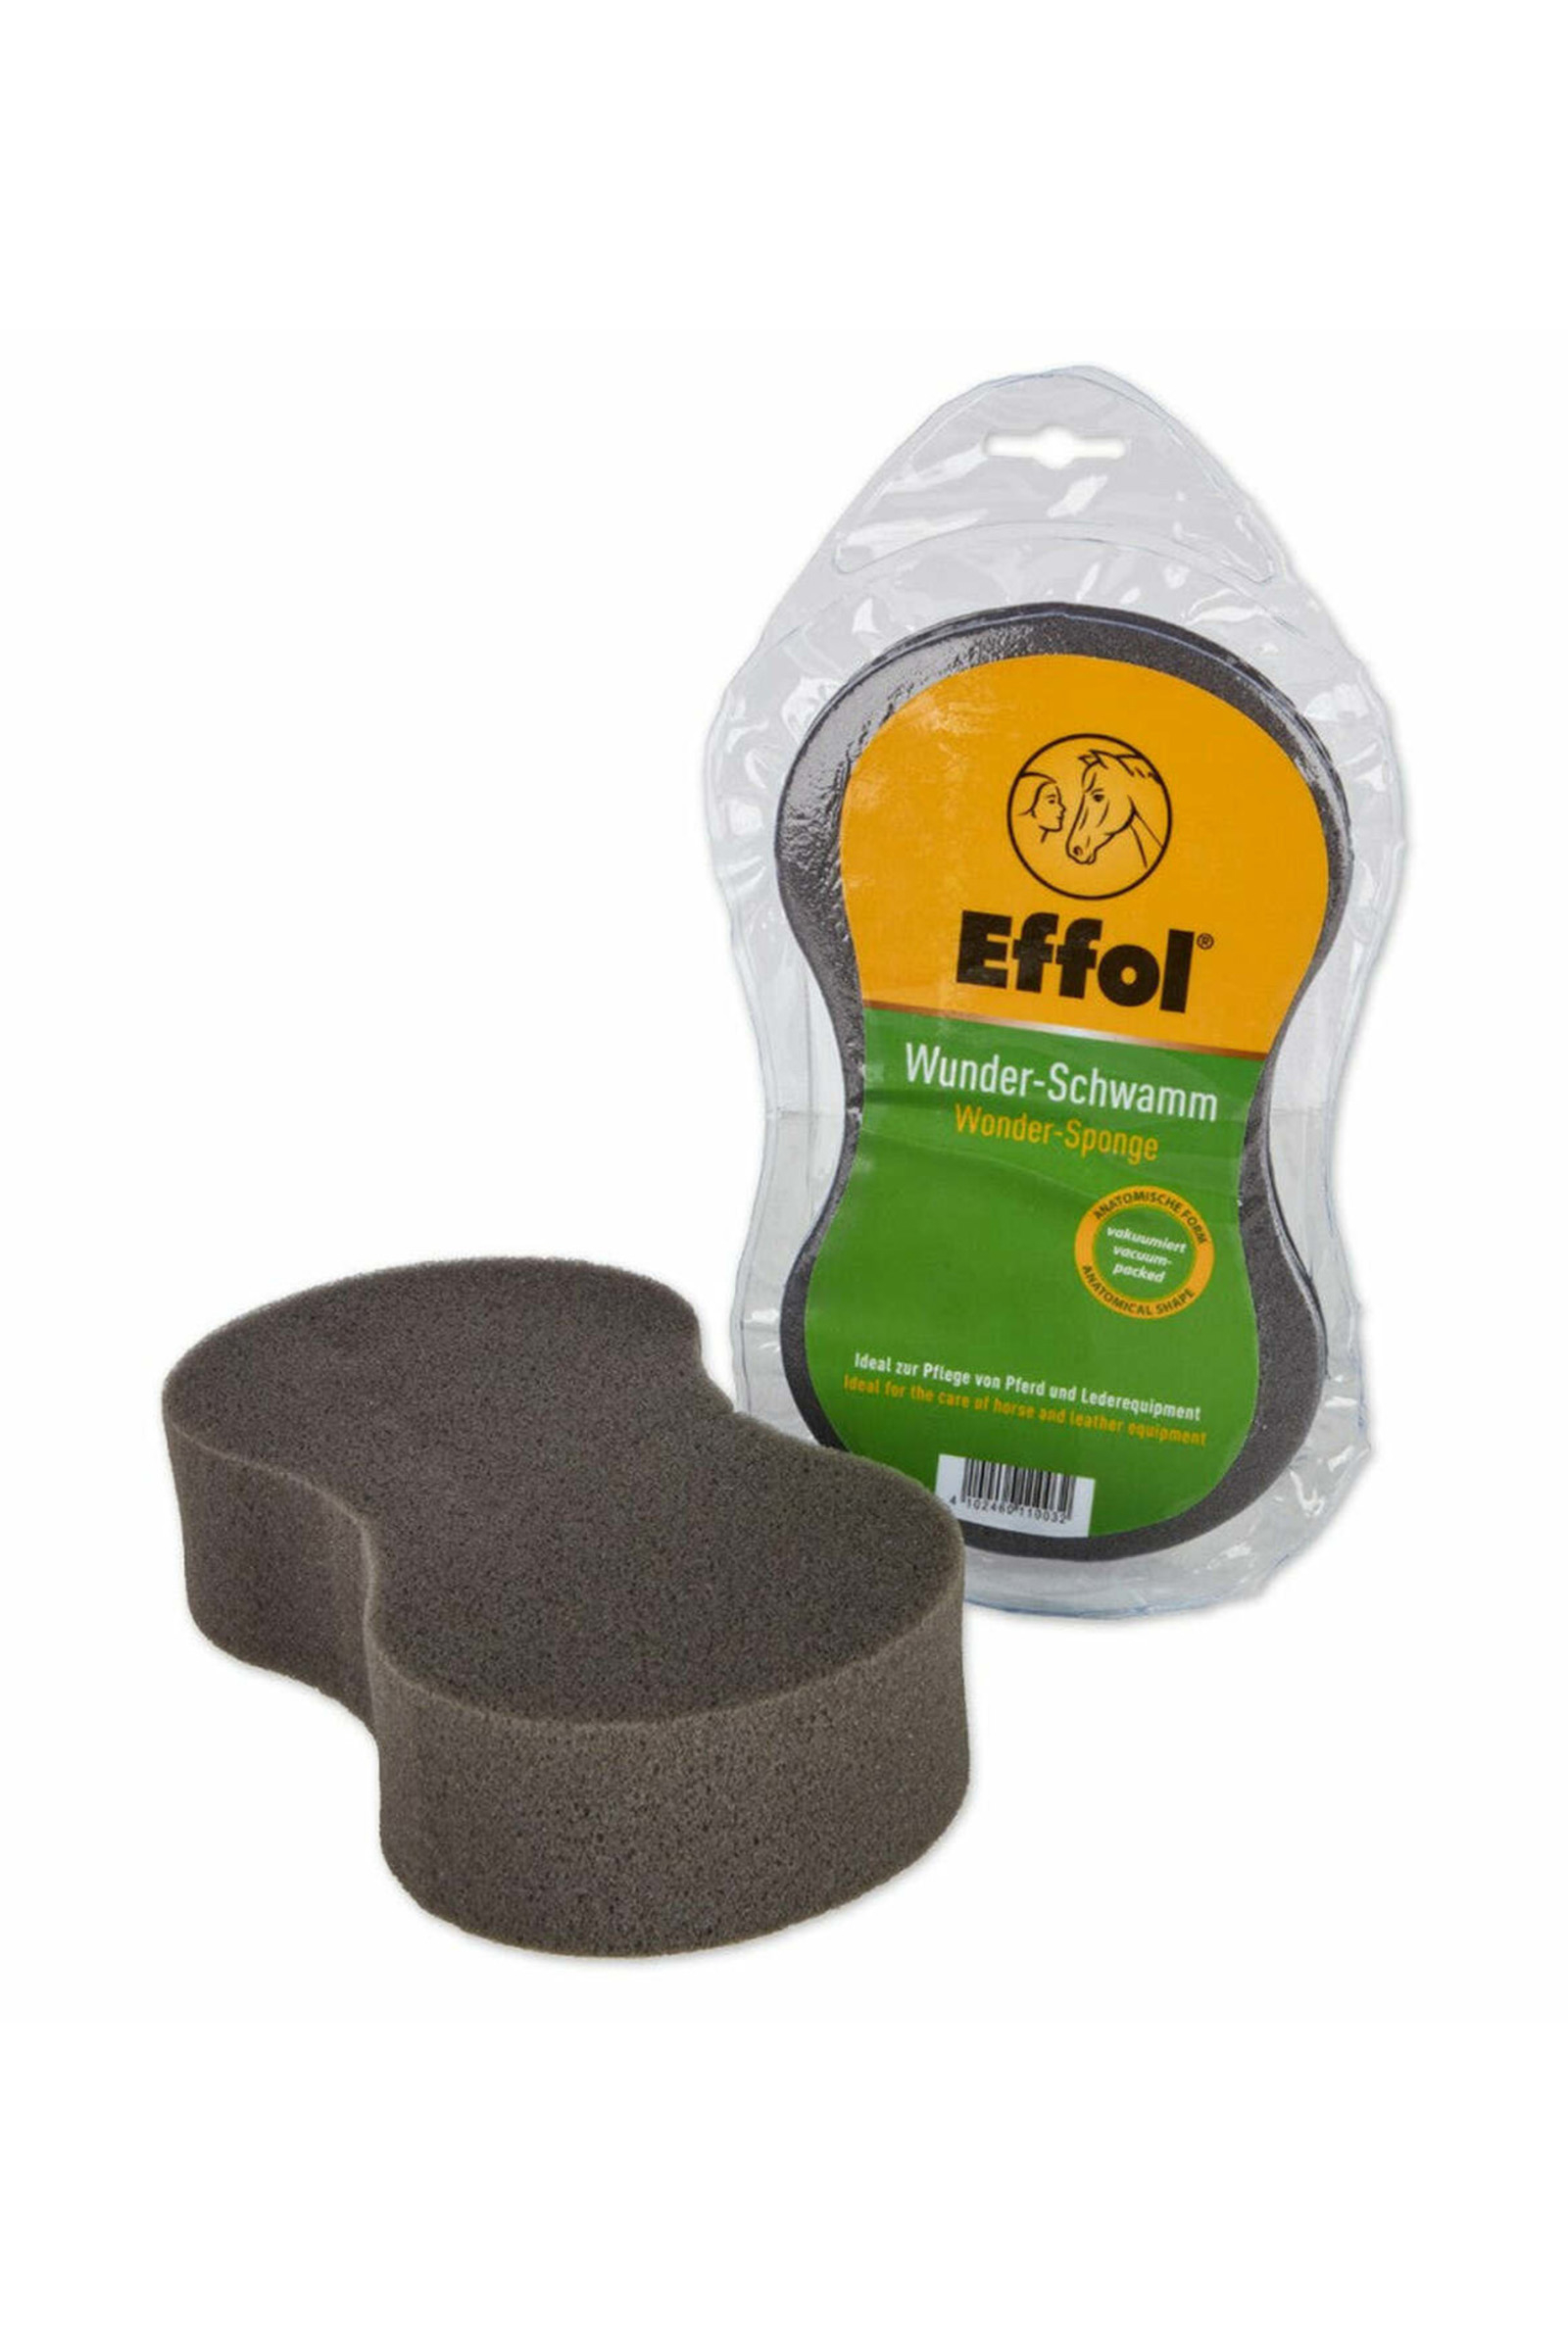 Buy Effol Wonder Sponge